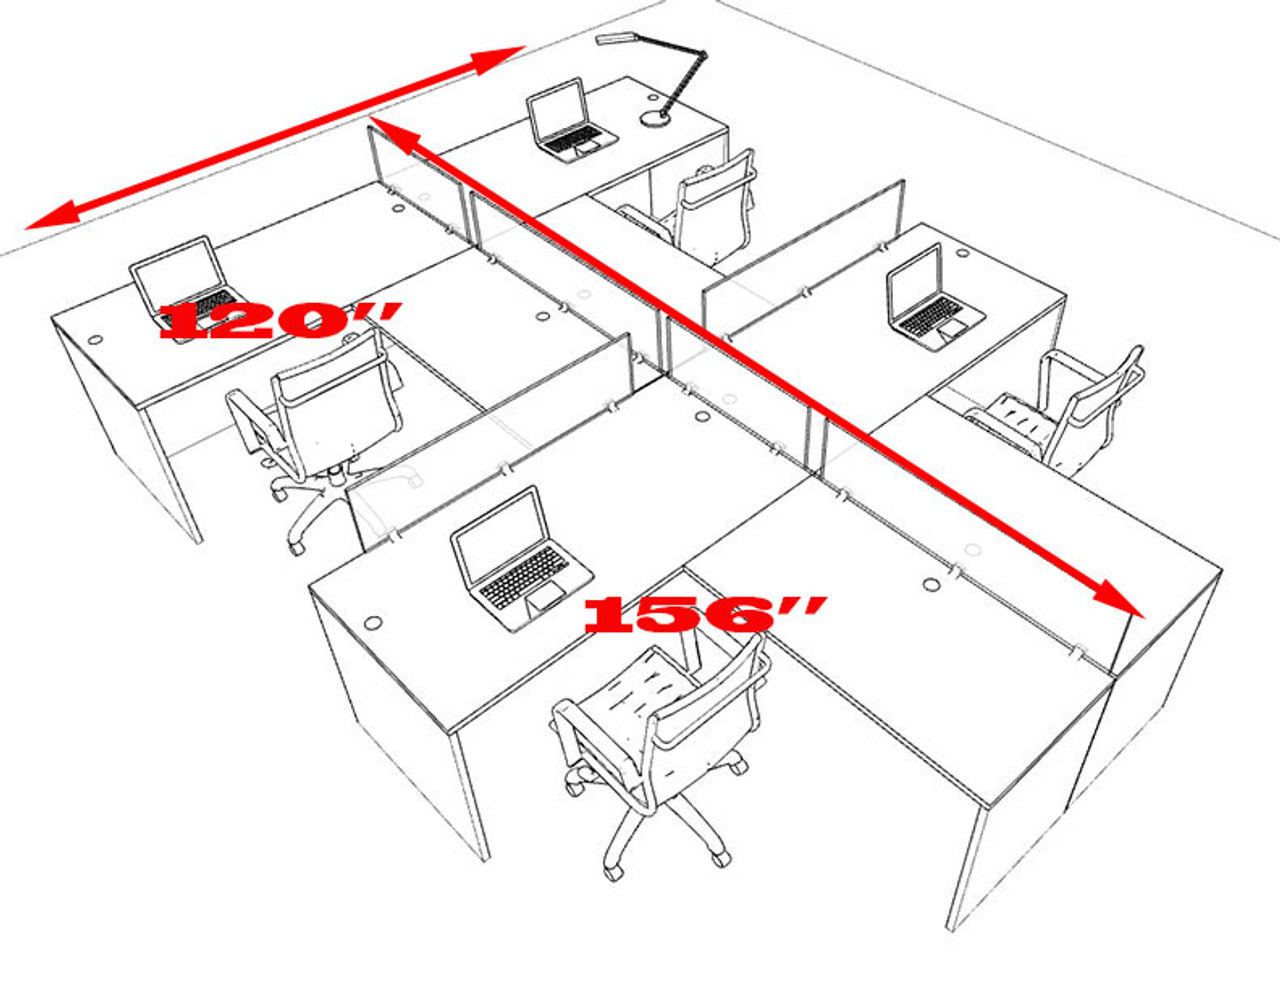 Four Person Modern Accoustic Divider Office Workstation Desk Set, #OT-SUL-SPRB45